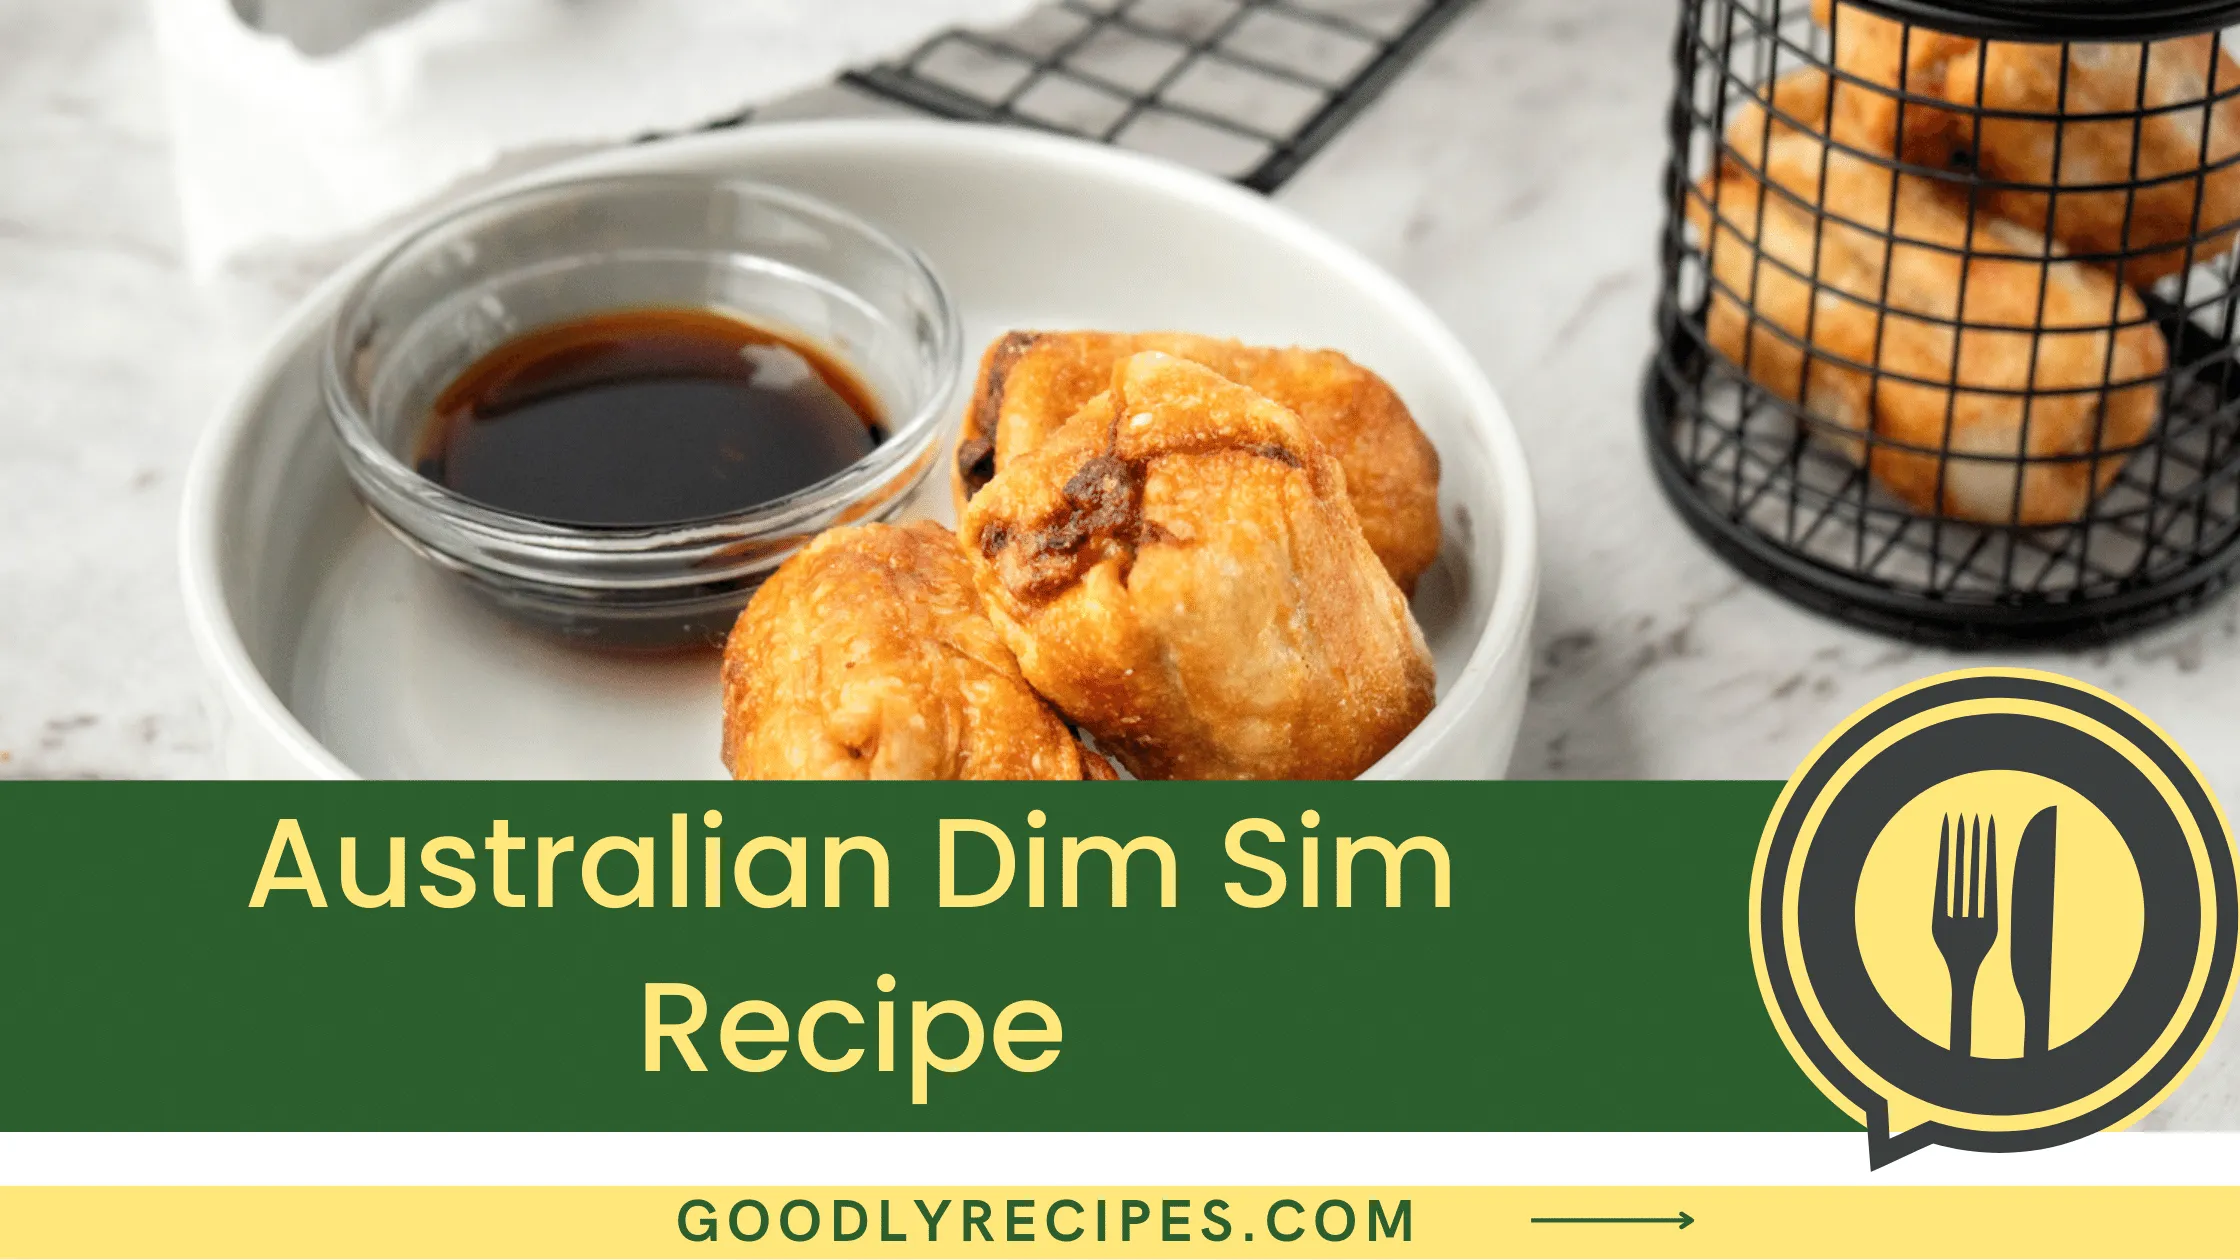 What is Australian Dim Sim?